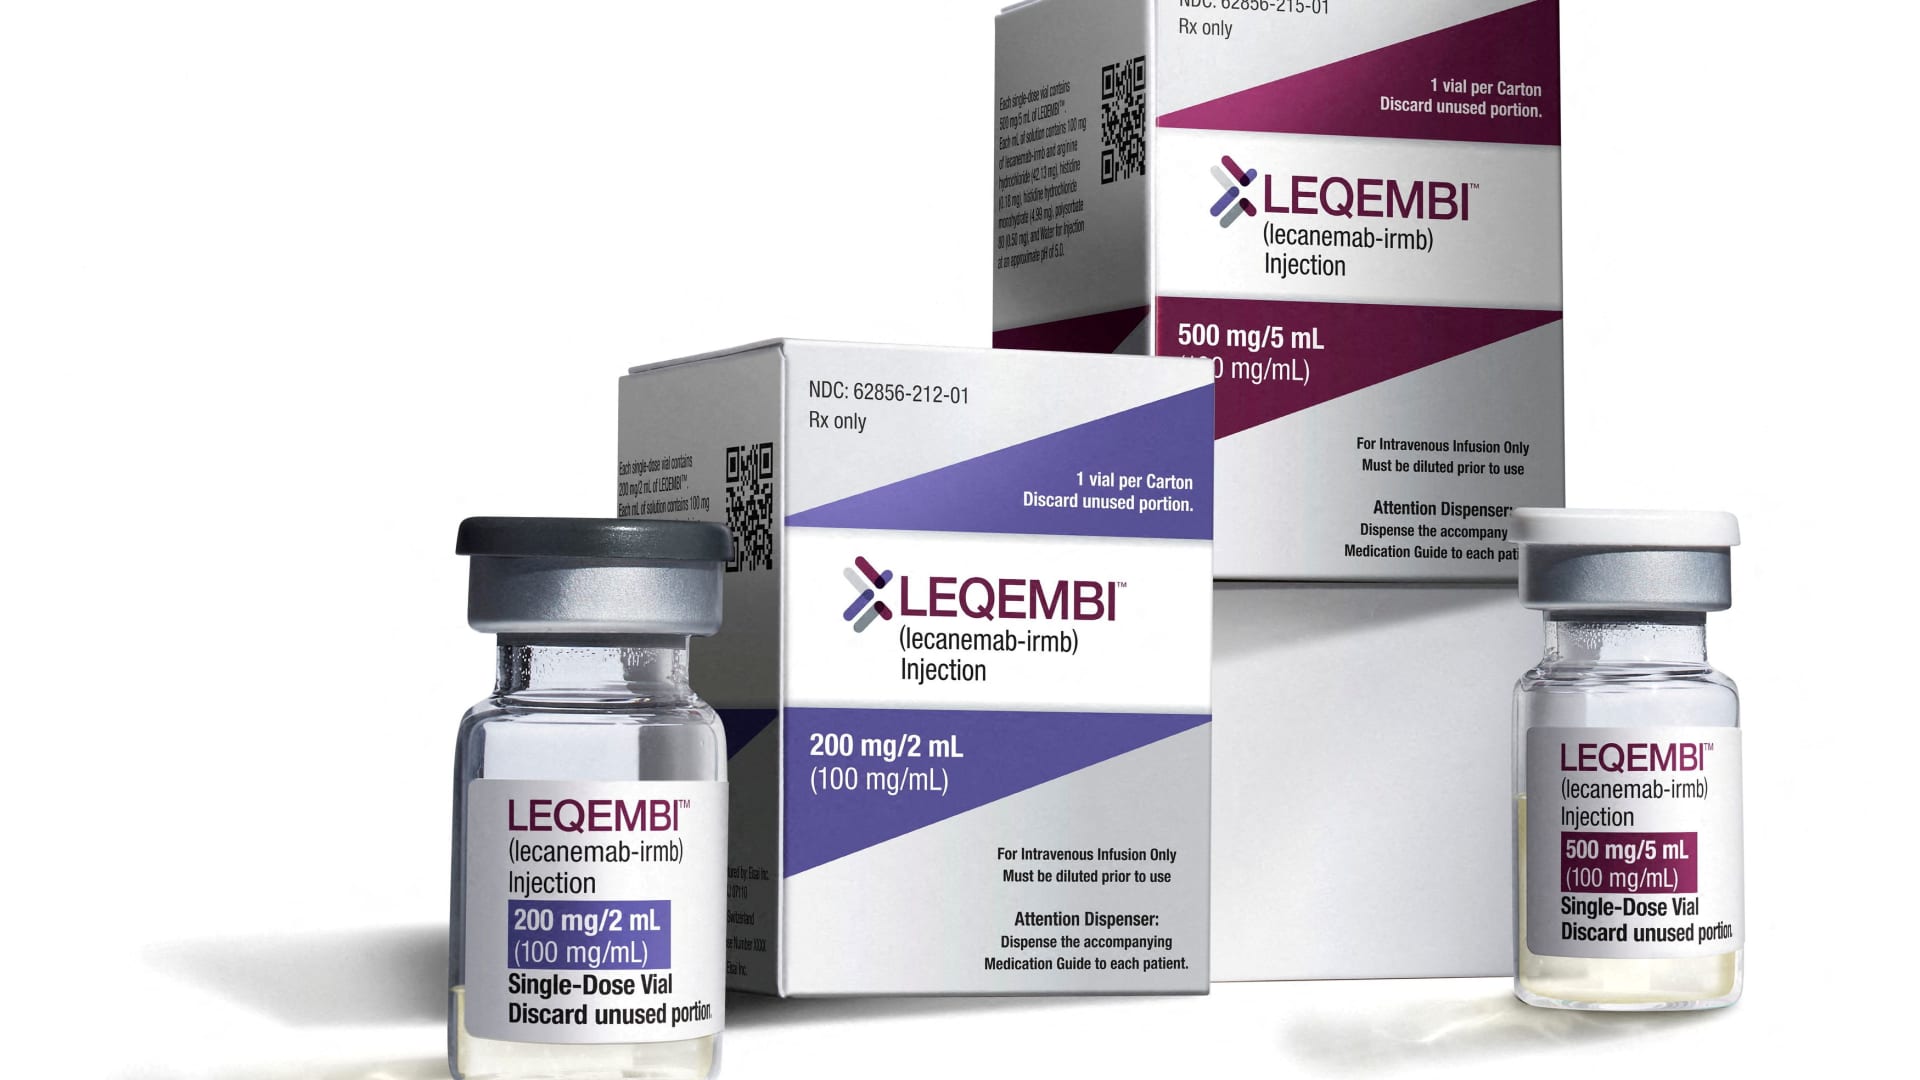 FDA advisors weigh whether Alzheimer's drug Leqembi should receive full approval